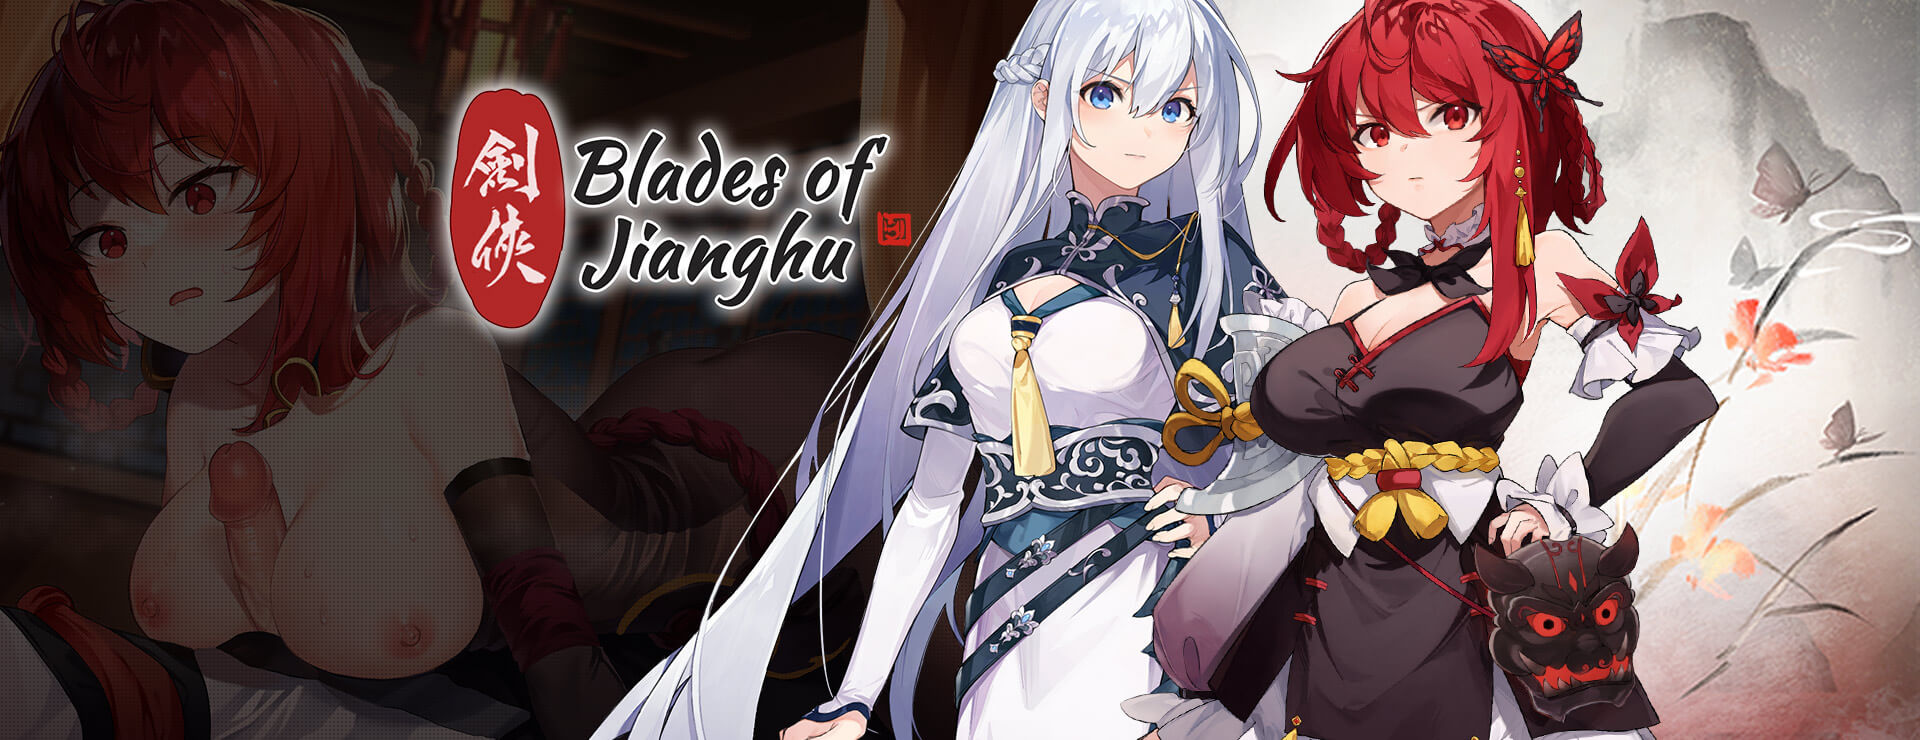 Blades of Jianghu: Ballad of Wind and Dust - RPG Gra